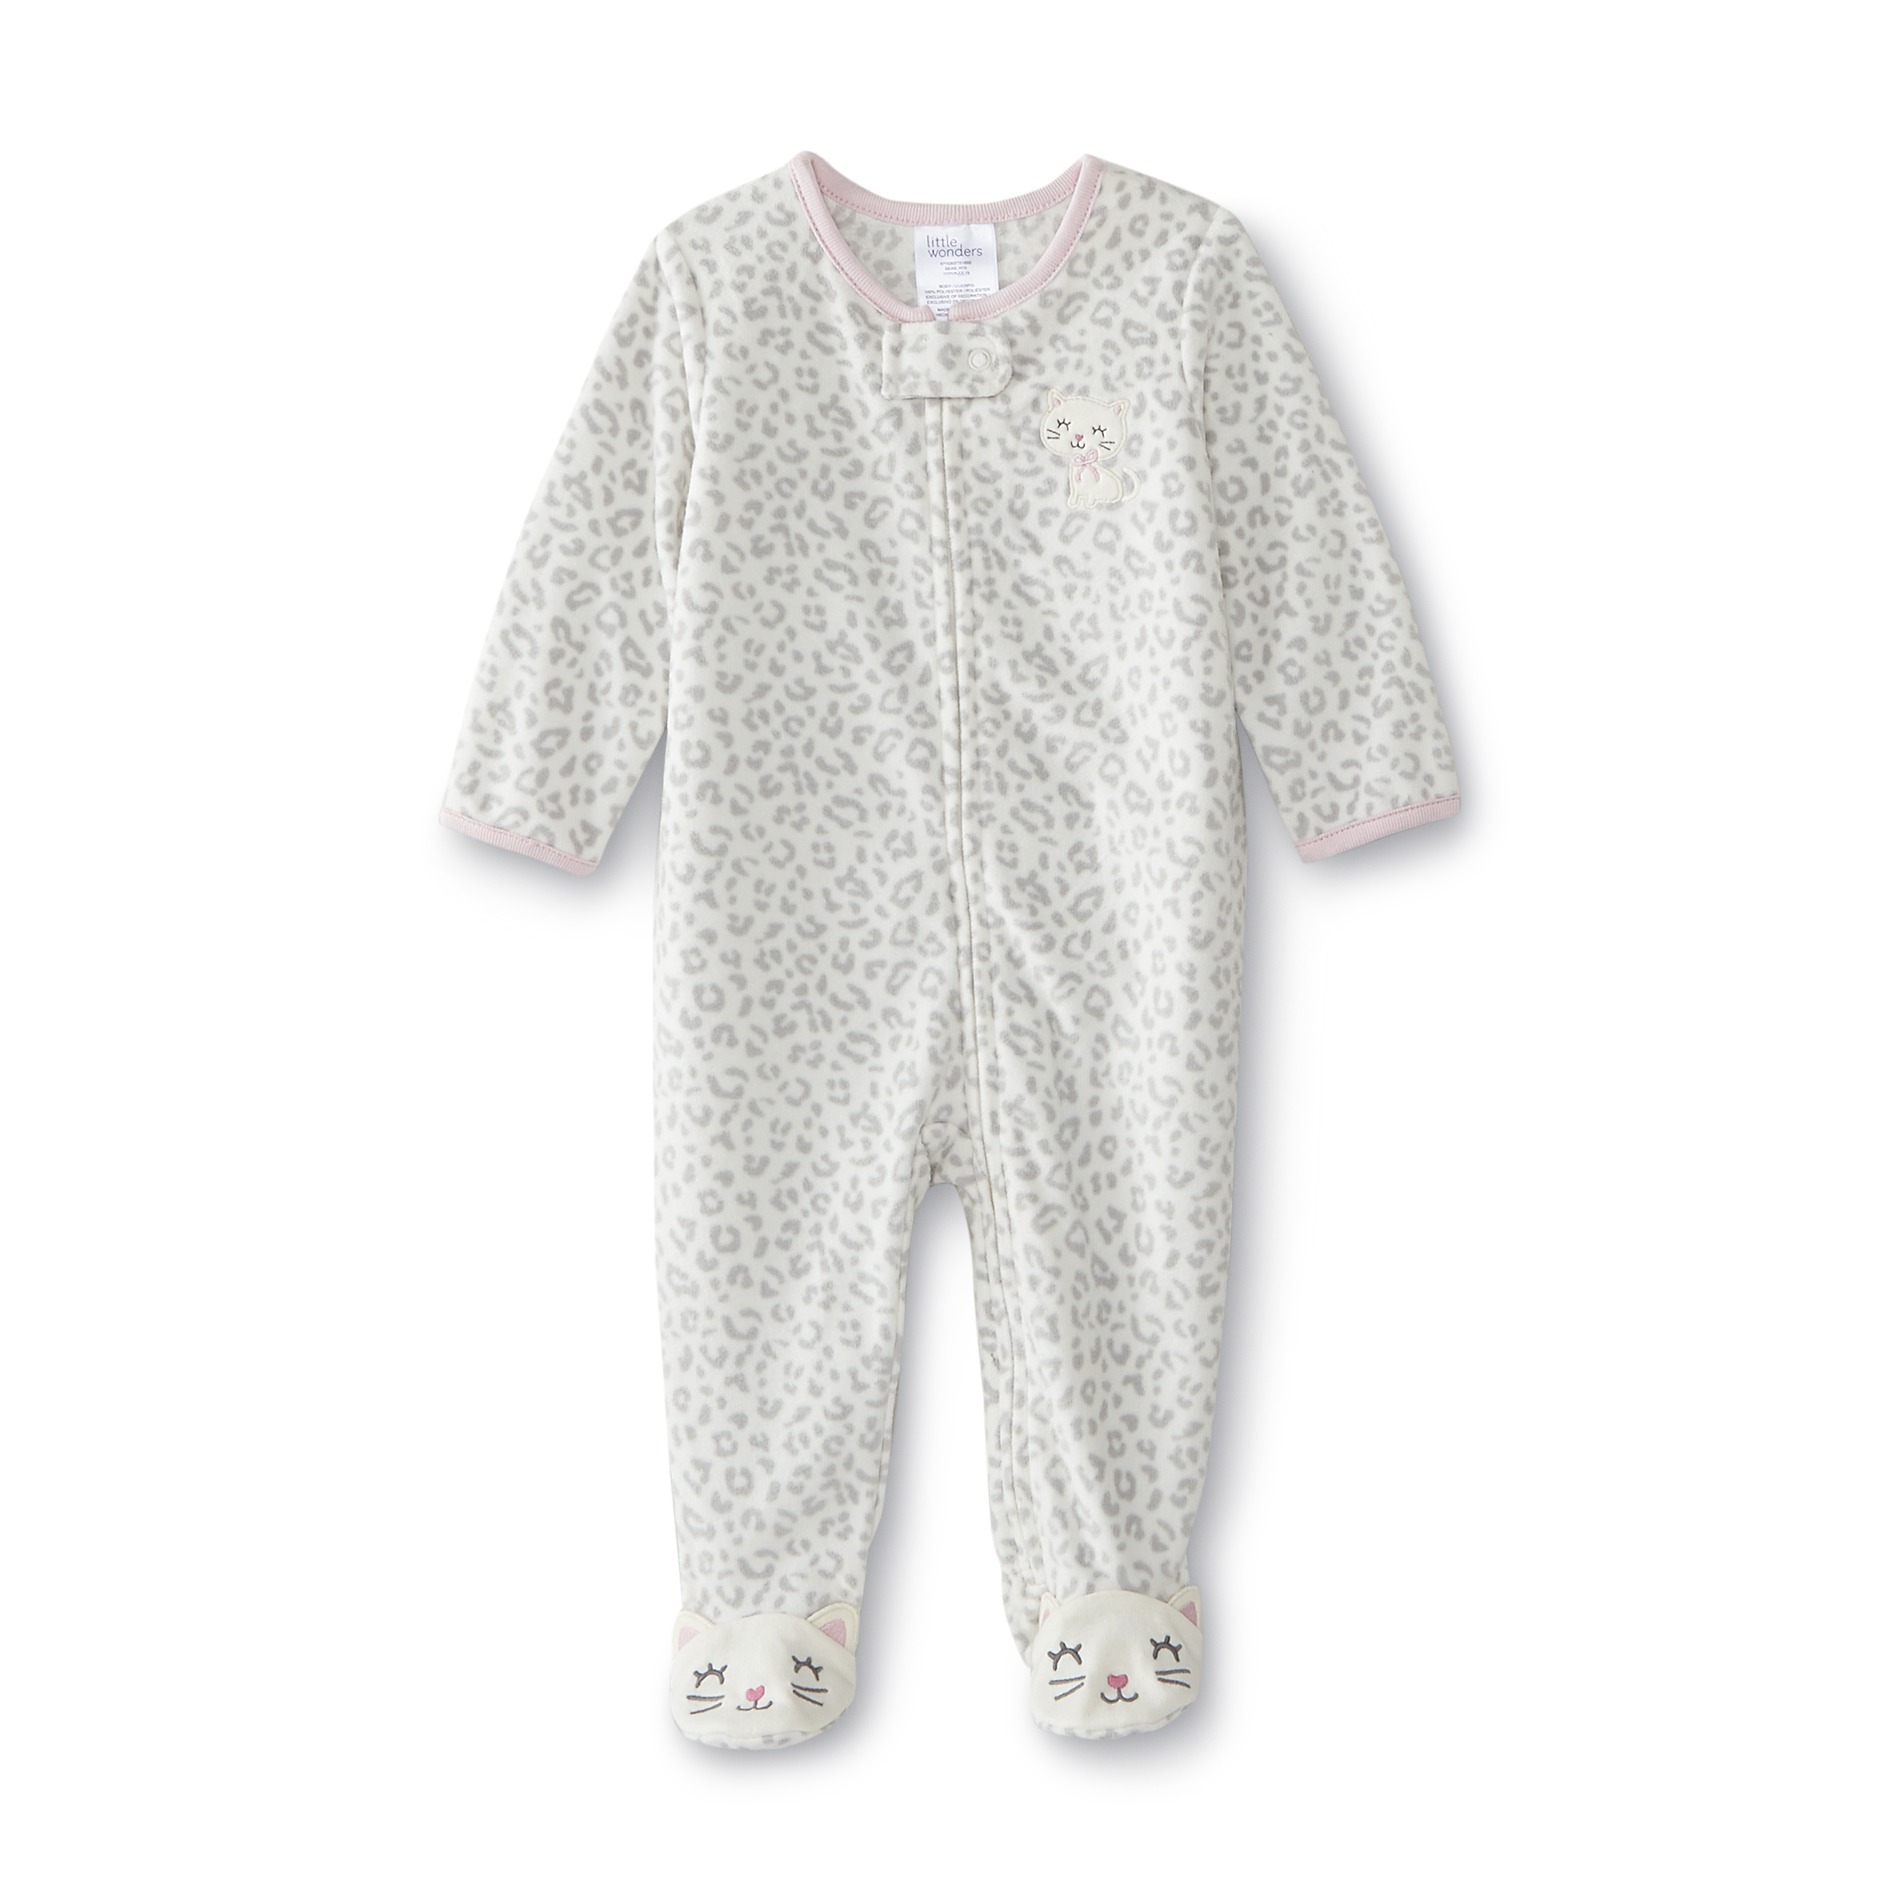 Little Wonders Infant Girl's Footed Fleece Pajamas - Leopard Print & Cat